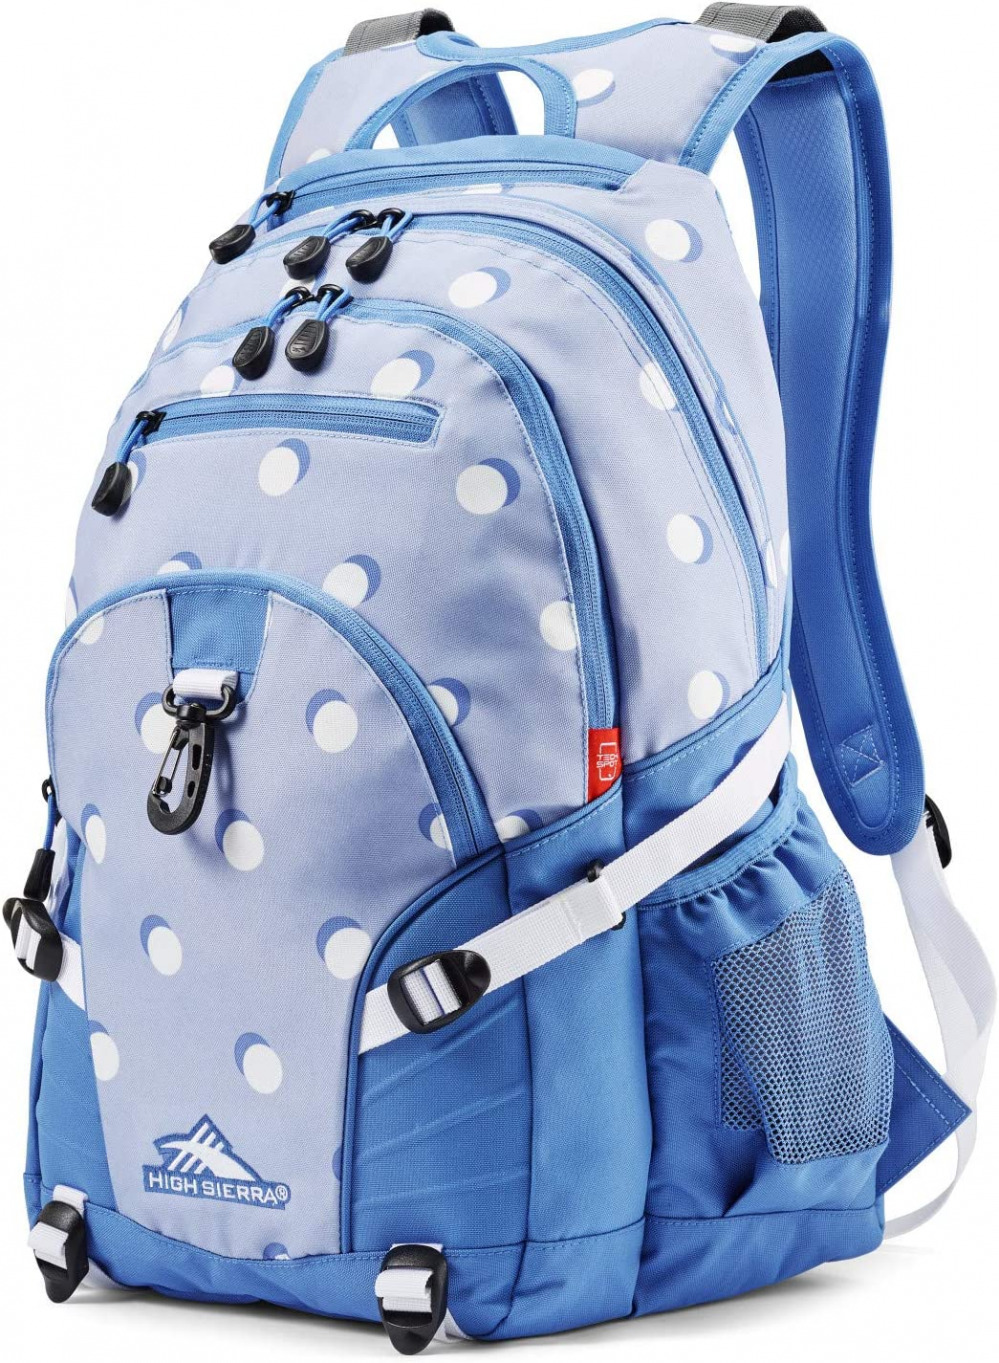 High Sierra Loop-Backpack, School, Travel, or Work One Size, Polka Dot 